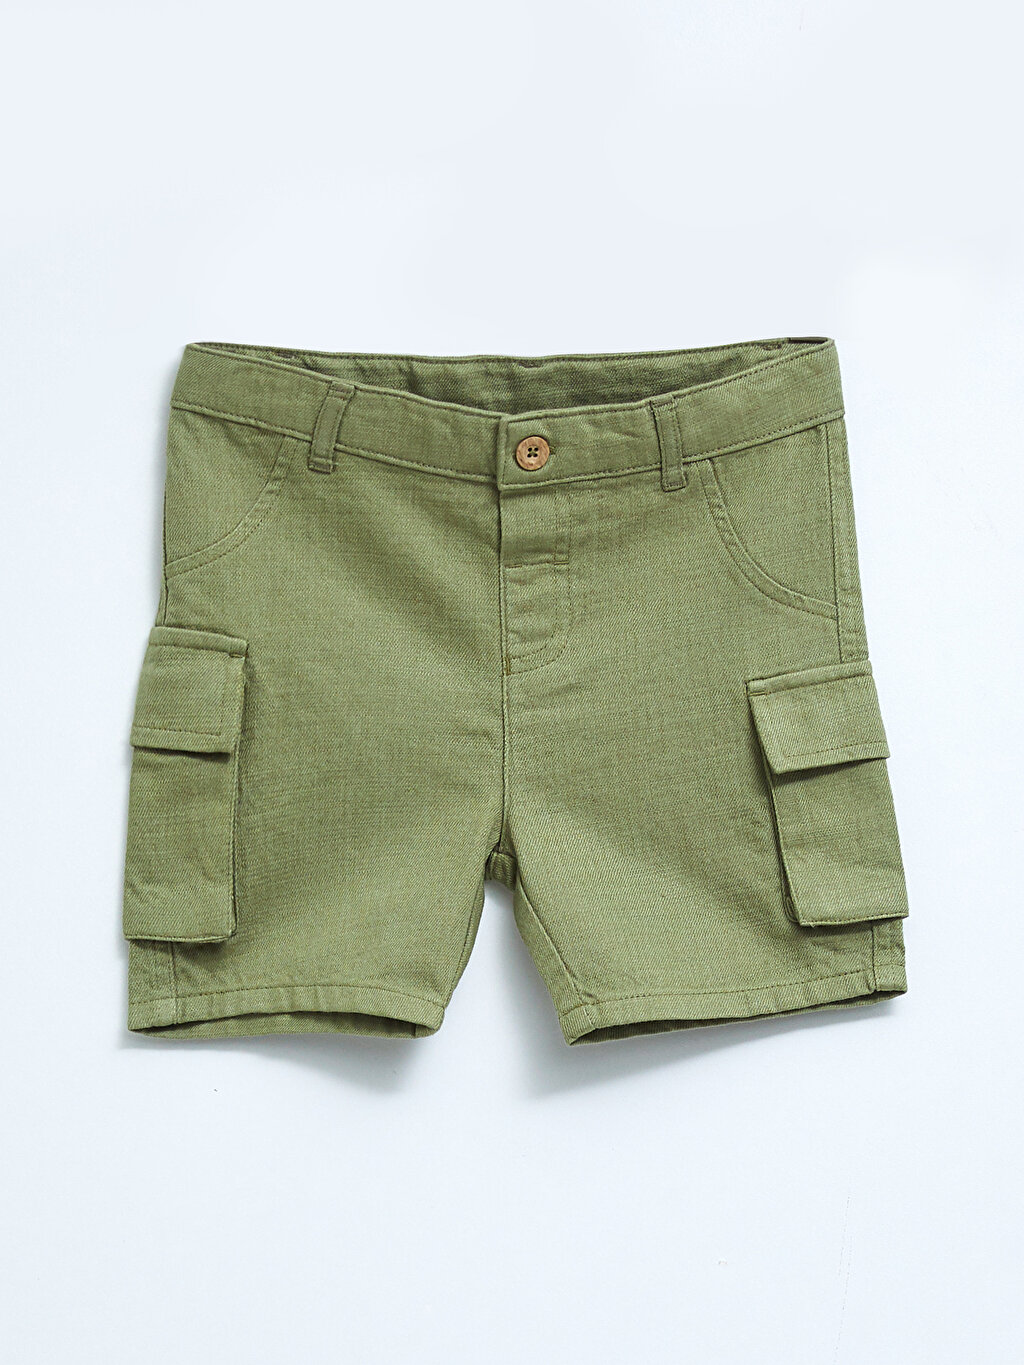 Short Sleeve Lion King Printed Cotton Baby Boy Shirt and Shorts 2-Pack Set  -S2G479Z1-LRA - S2G479Z1-LRA - LC Waikiki